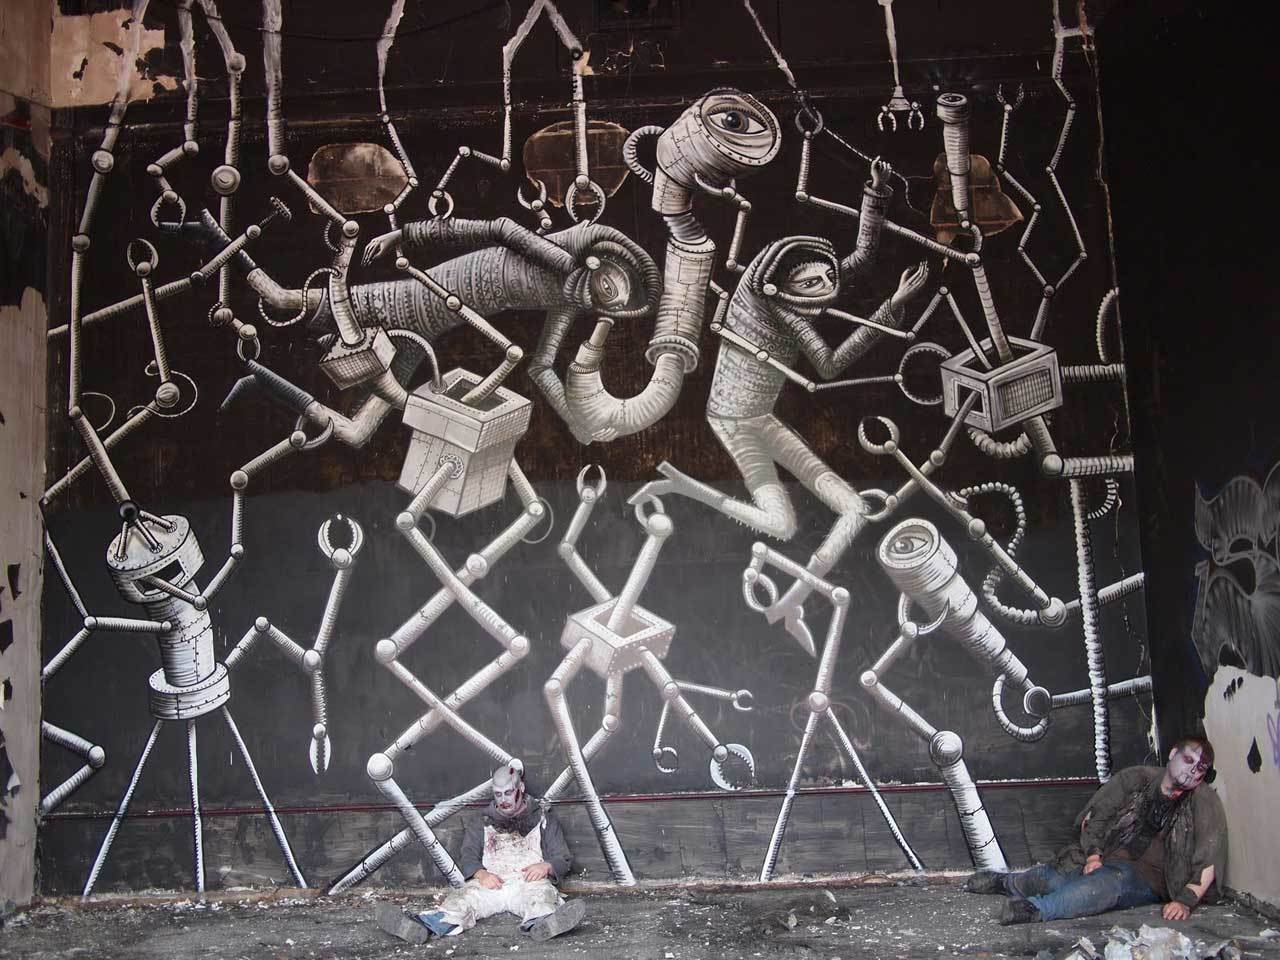 #streetart #urbanart #graffiti #mural "Zombie" by English #artist Phlegm https://t.co/qrrS7ZU50p